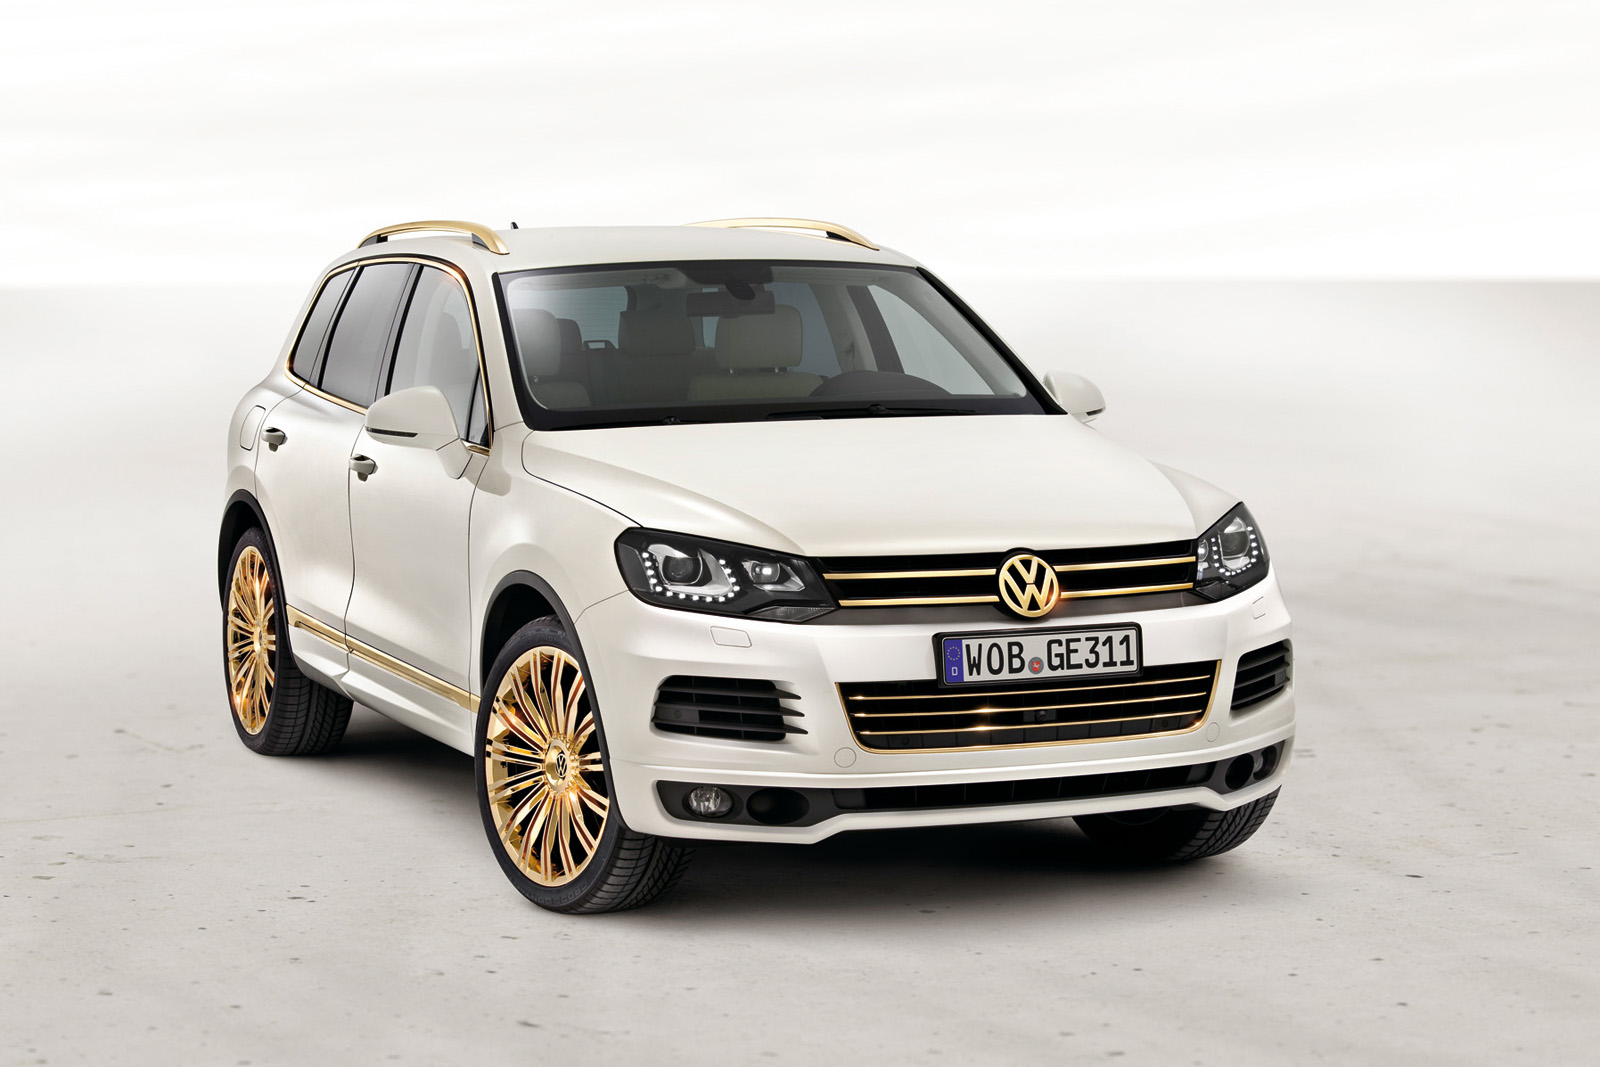 Volkswagen Touareg Gold